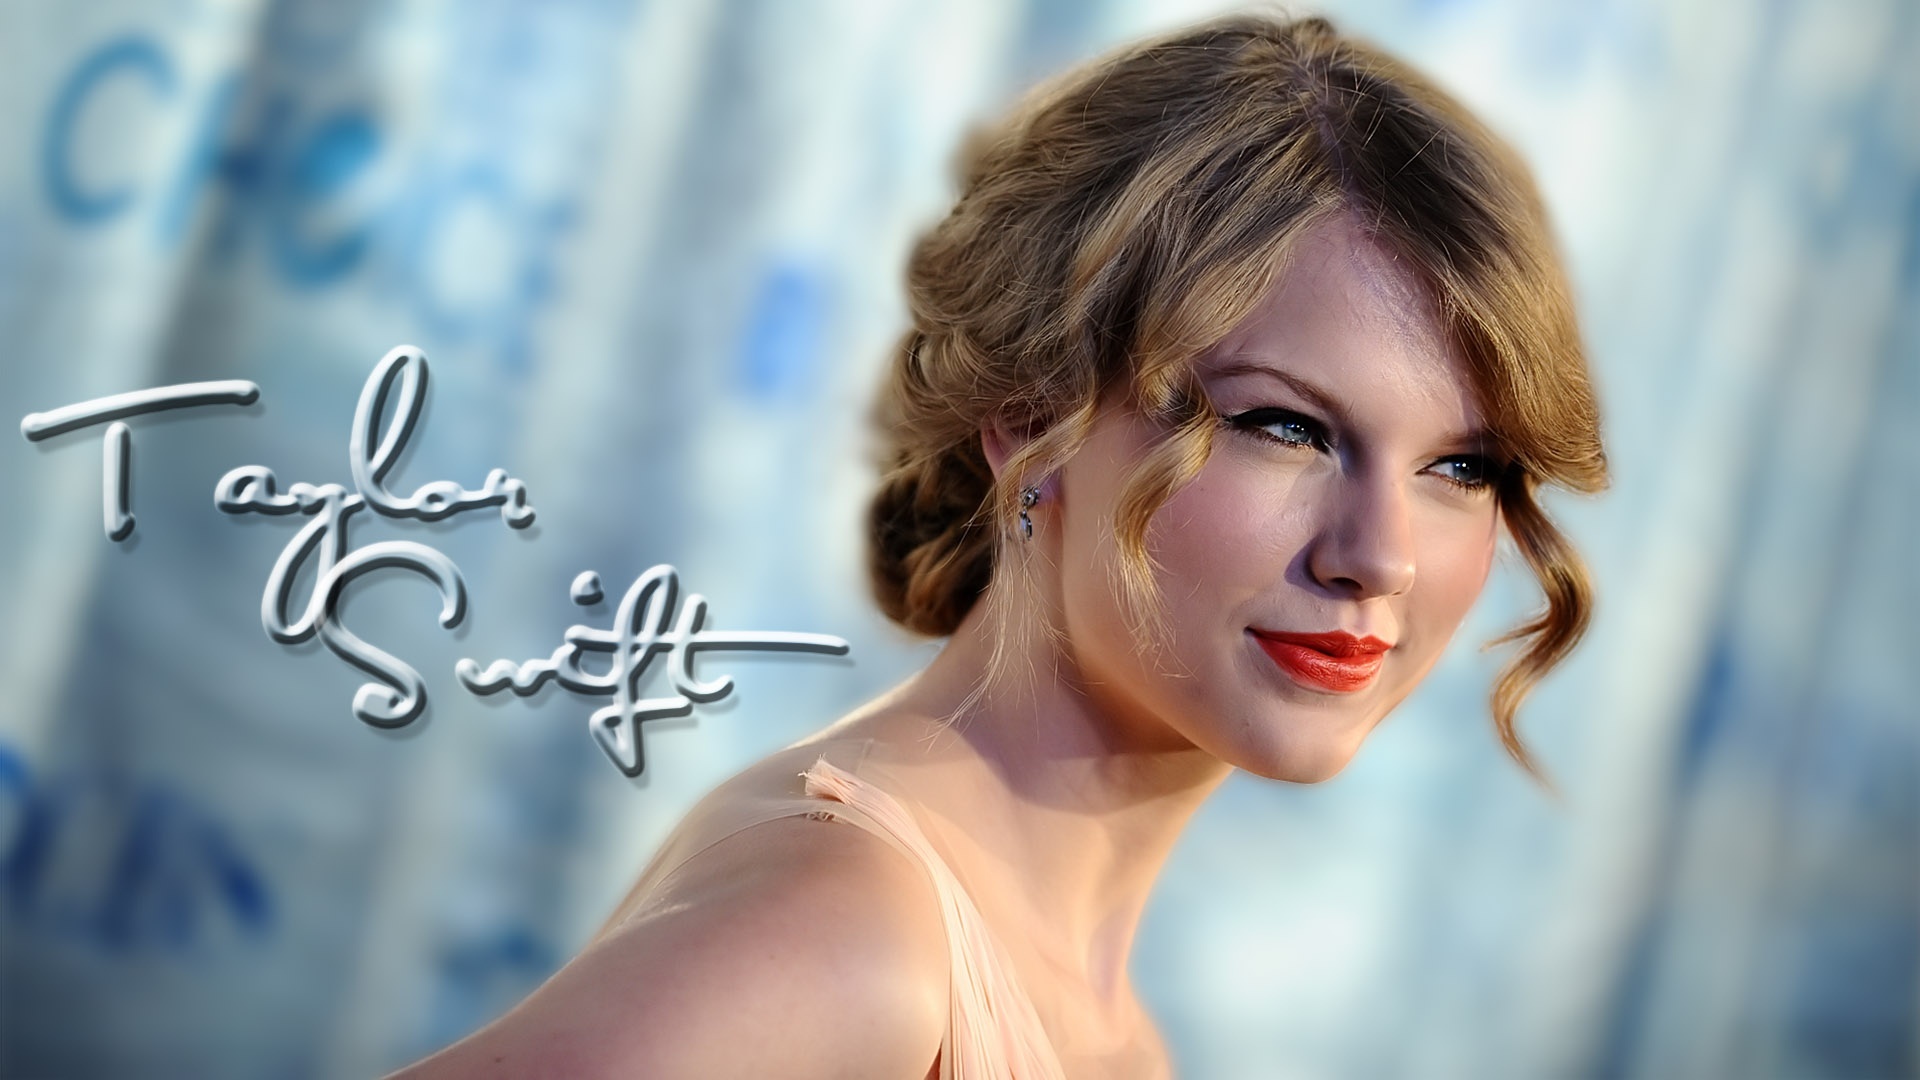 Lovely Taylor Wallpaper Swift